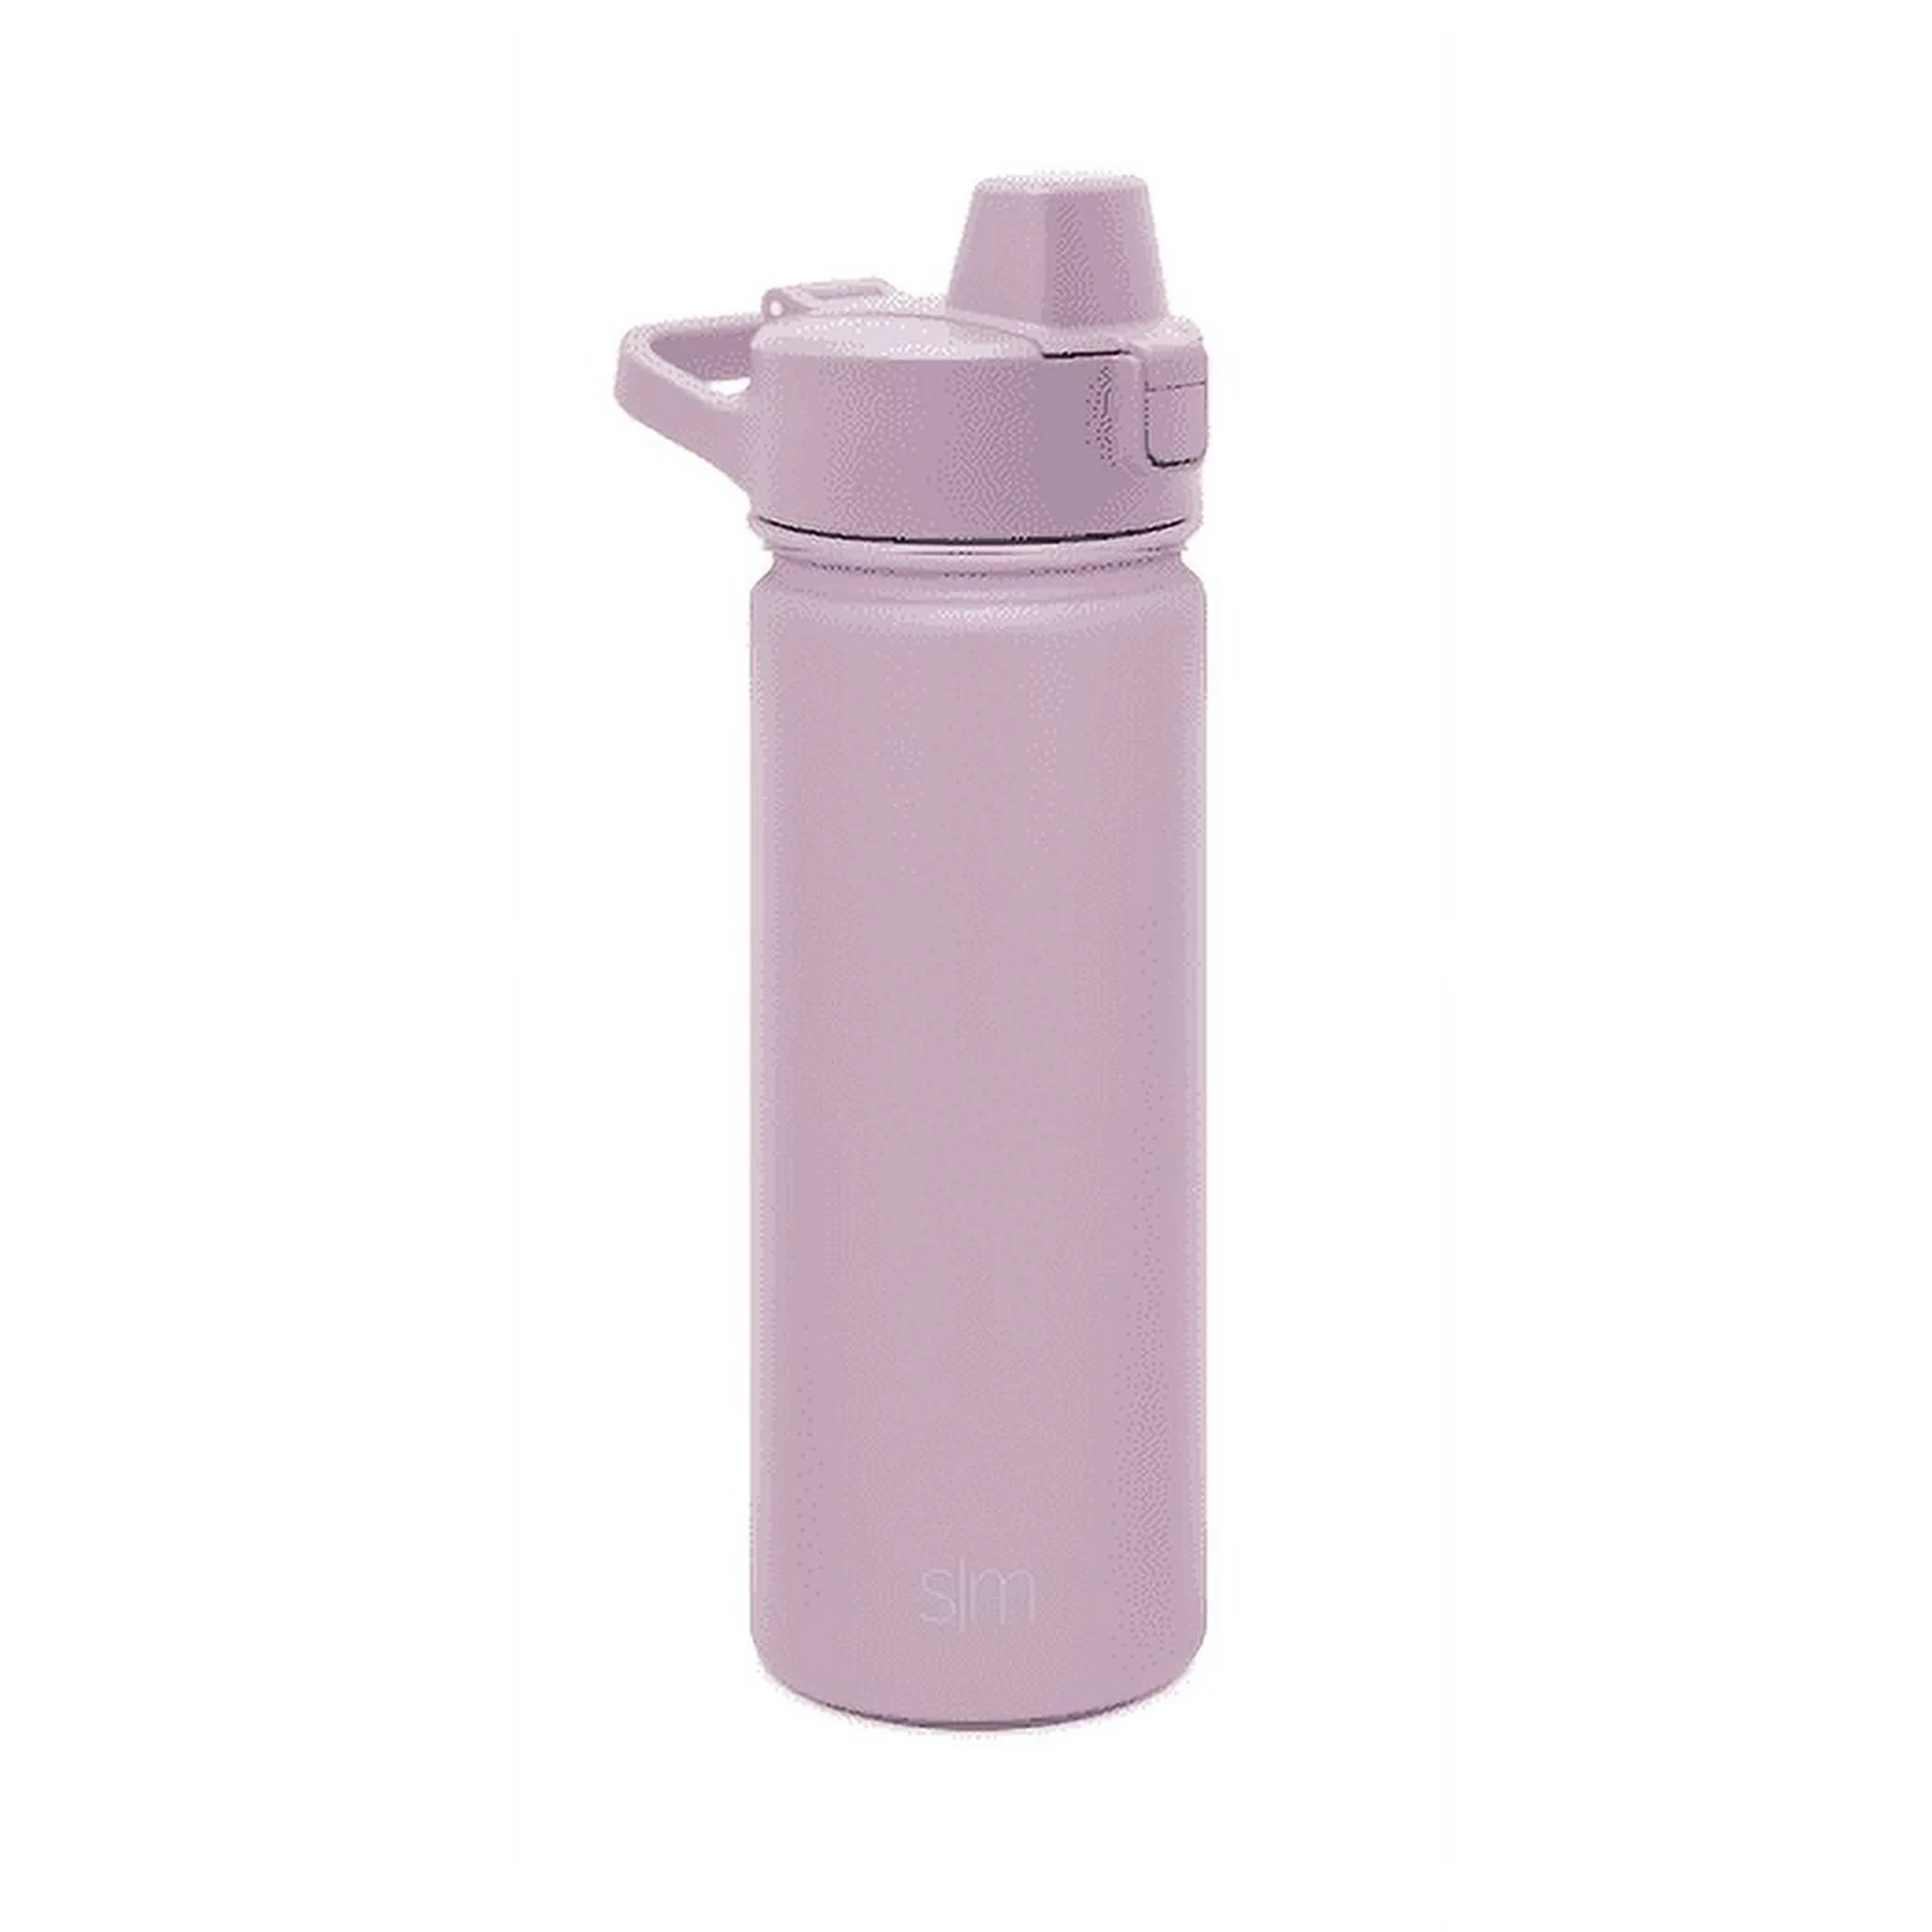 https://storesgo.com/uploads/product/mediumthumb/jpg/simple-modern-18-fl-oz-stainless-steel-summit-water-bottle-with-silicone-straw-lid_lavender-mist_1700235374.jpg